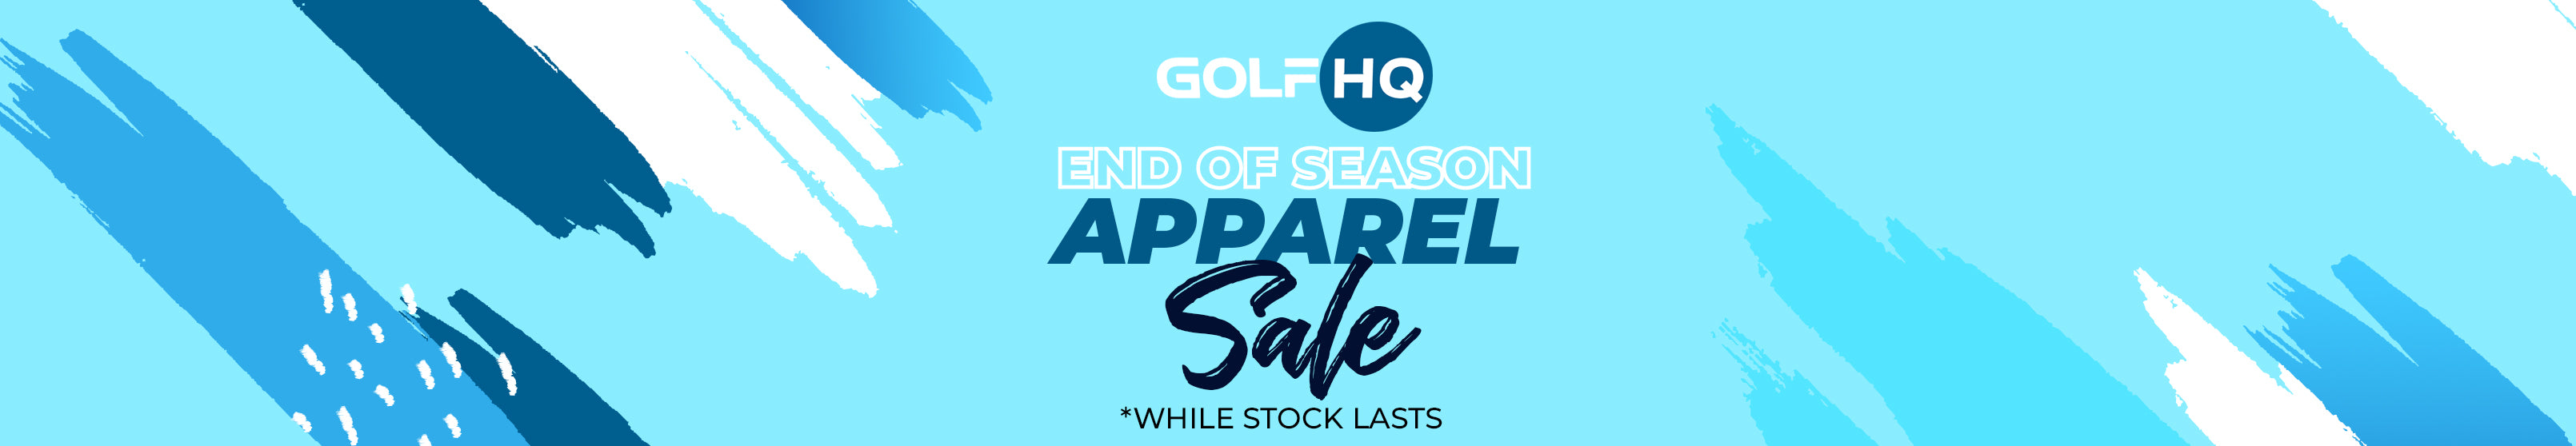 End of Season Apparel Sale!